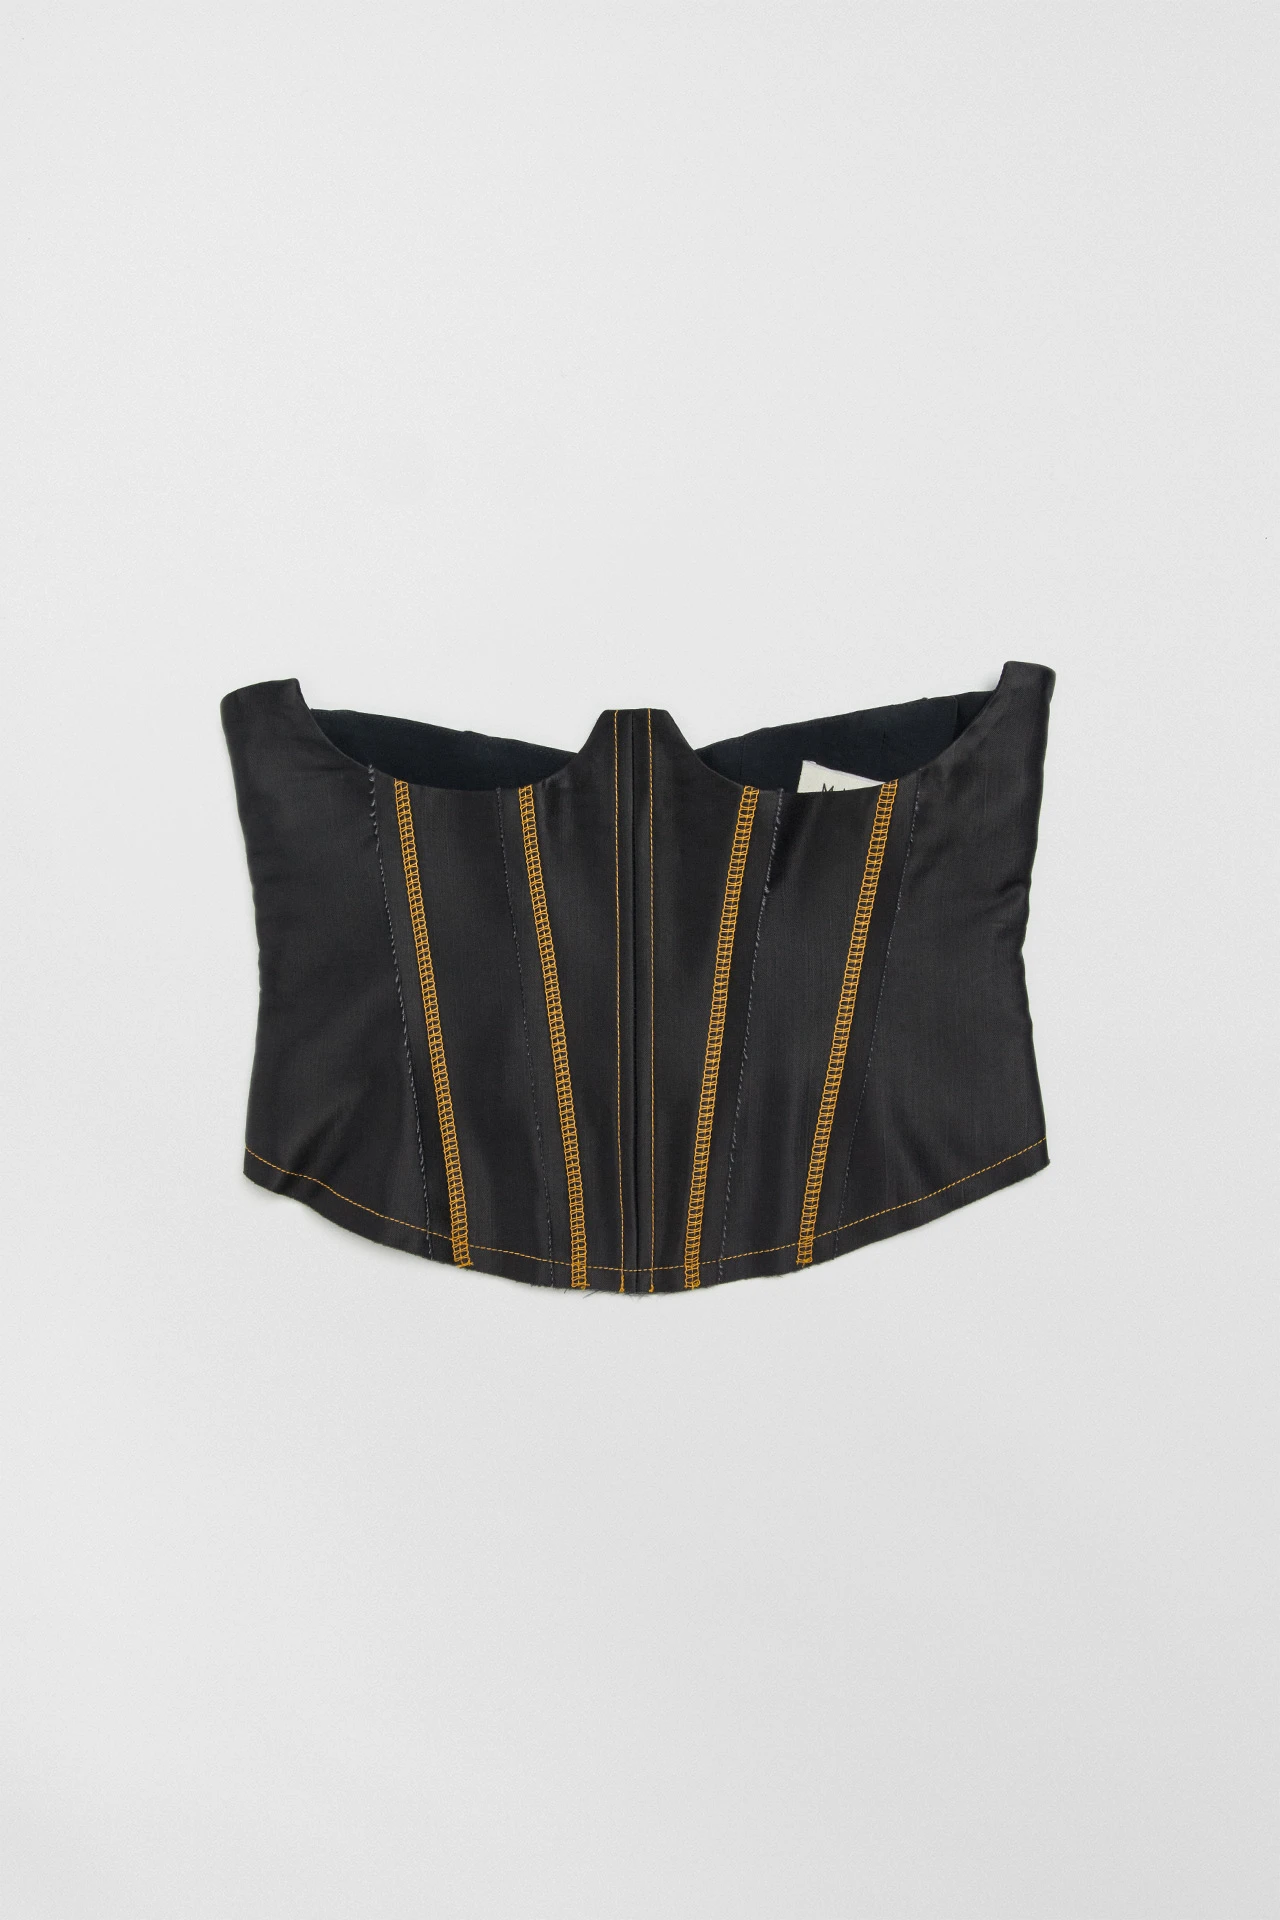 Miista-vera-dark-slate-corset-01